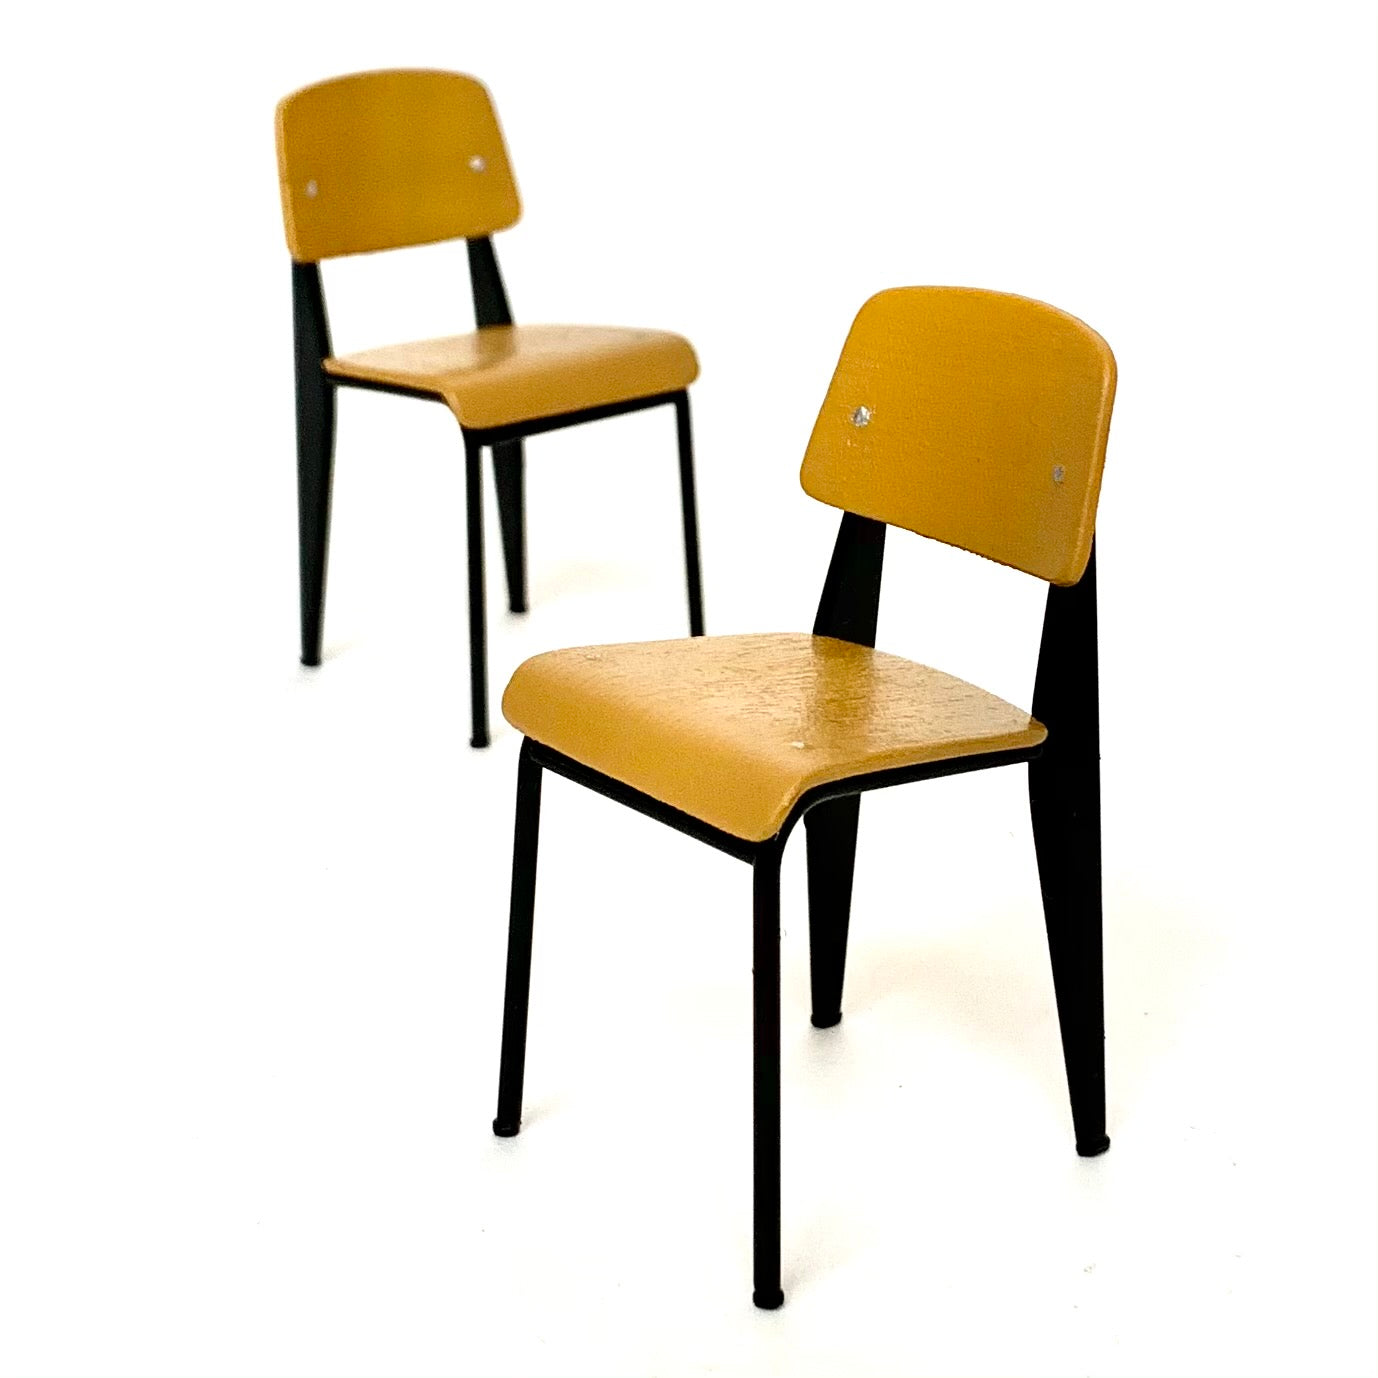 X 75118 Standard Chair-DISCONTINUED